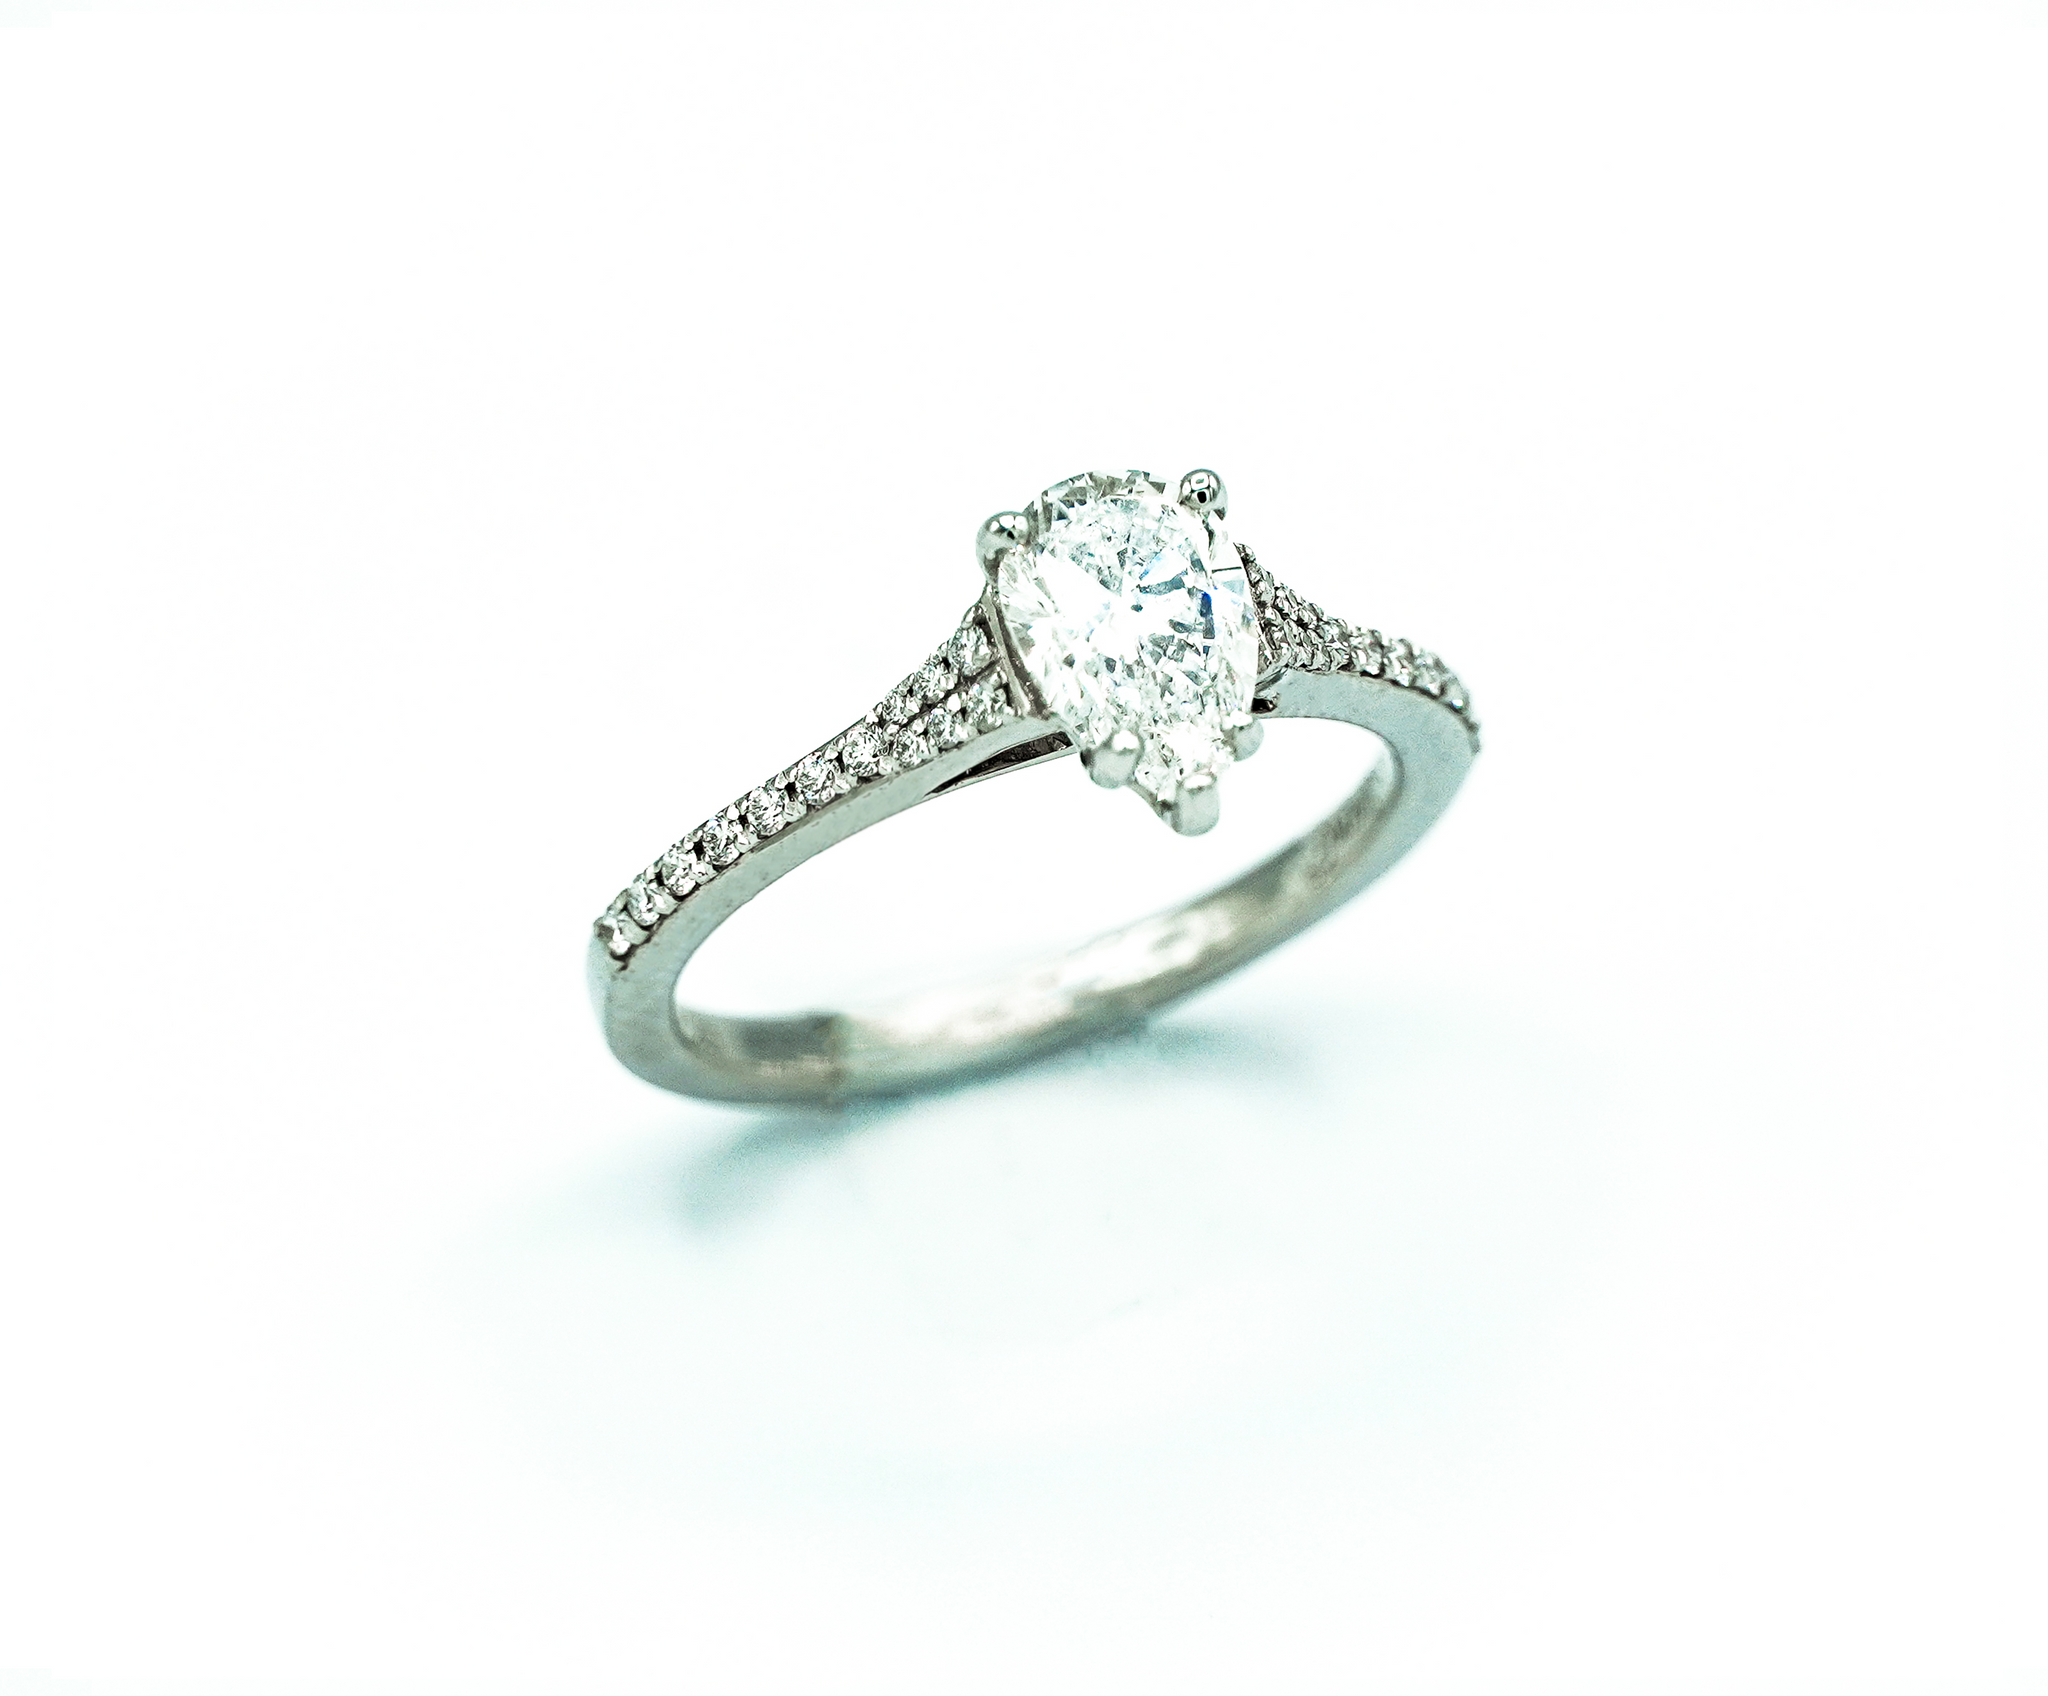 Montalvo Diamonds - Pear Brilliant Cut Ring in 18kt White Gold